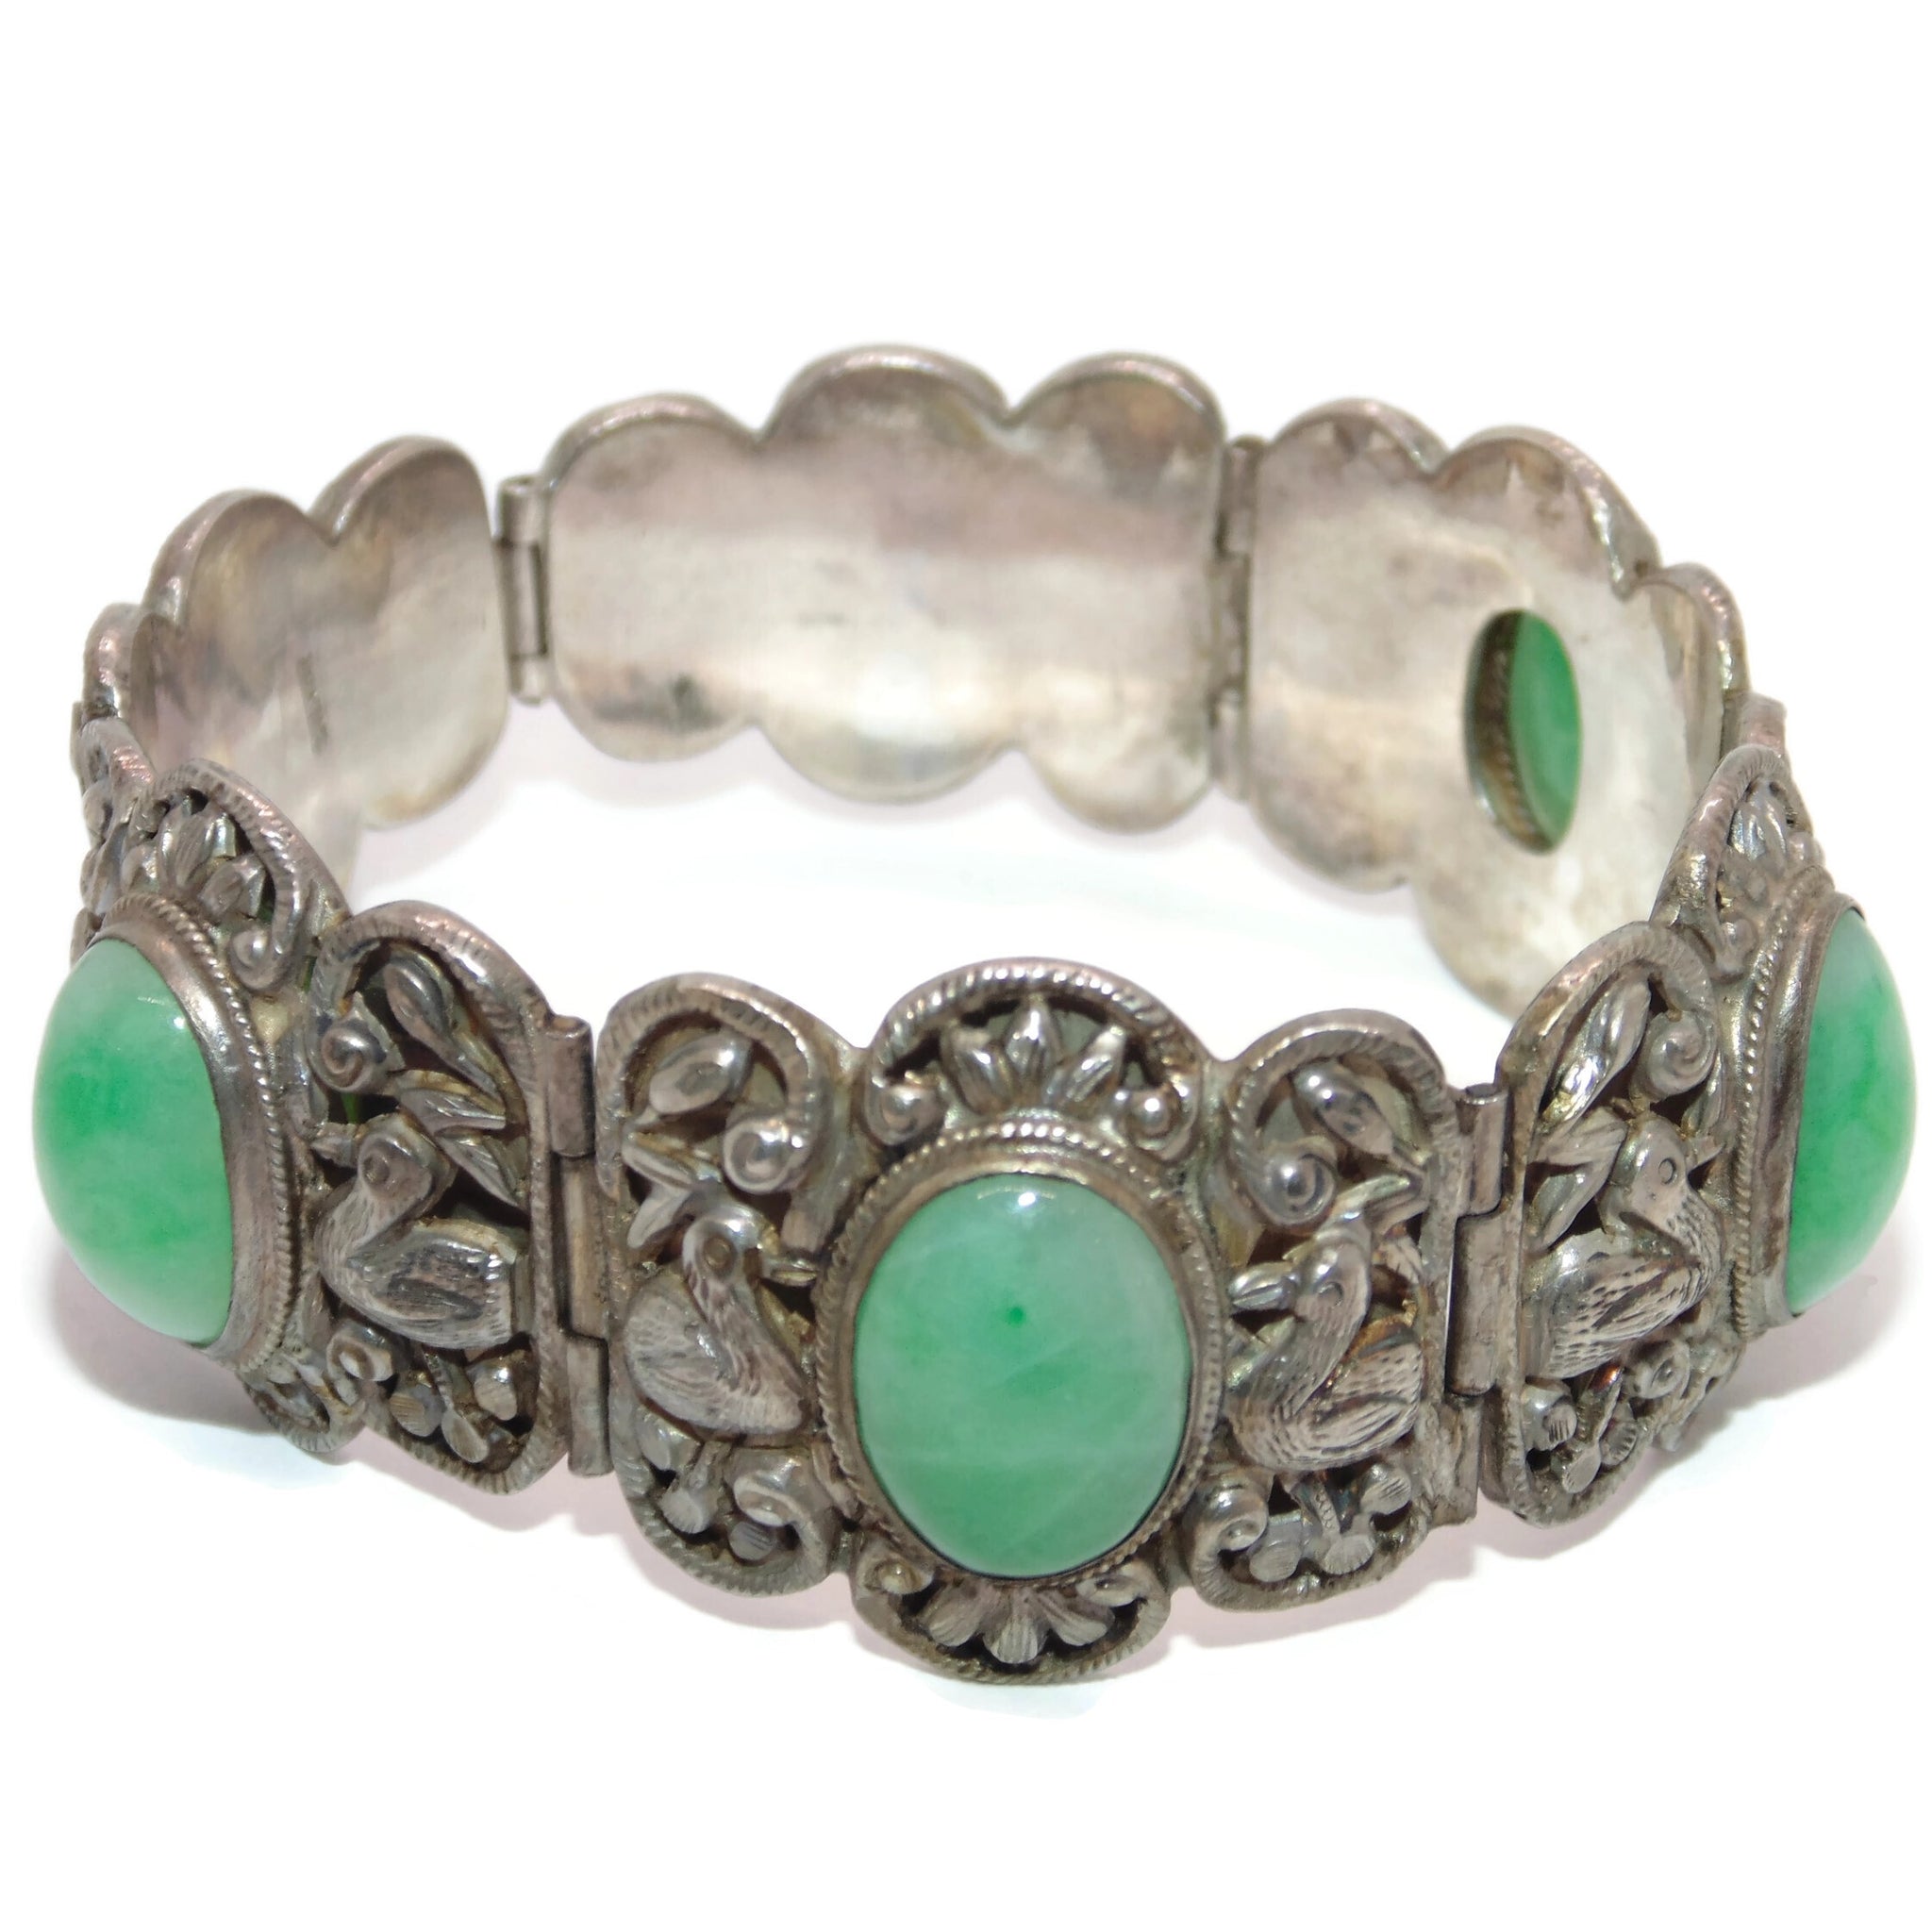 Antique Chinese Jade & Silver Bracelet